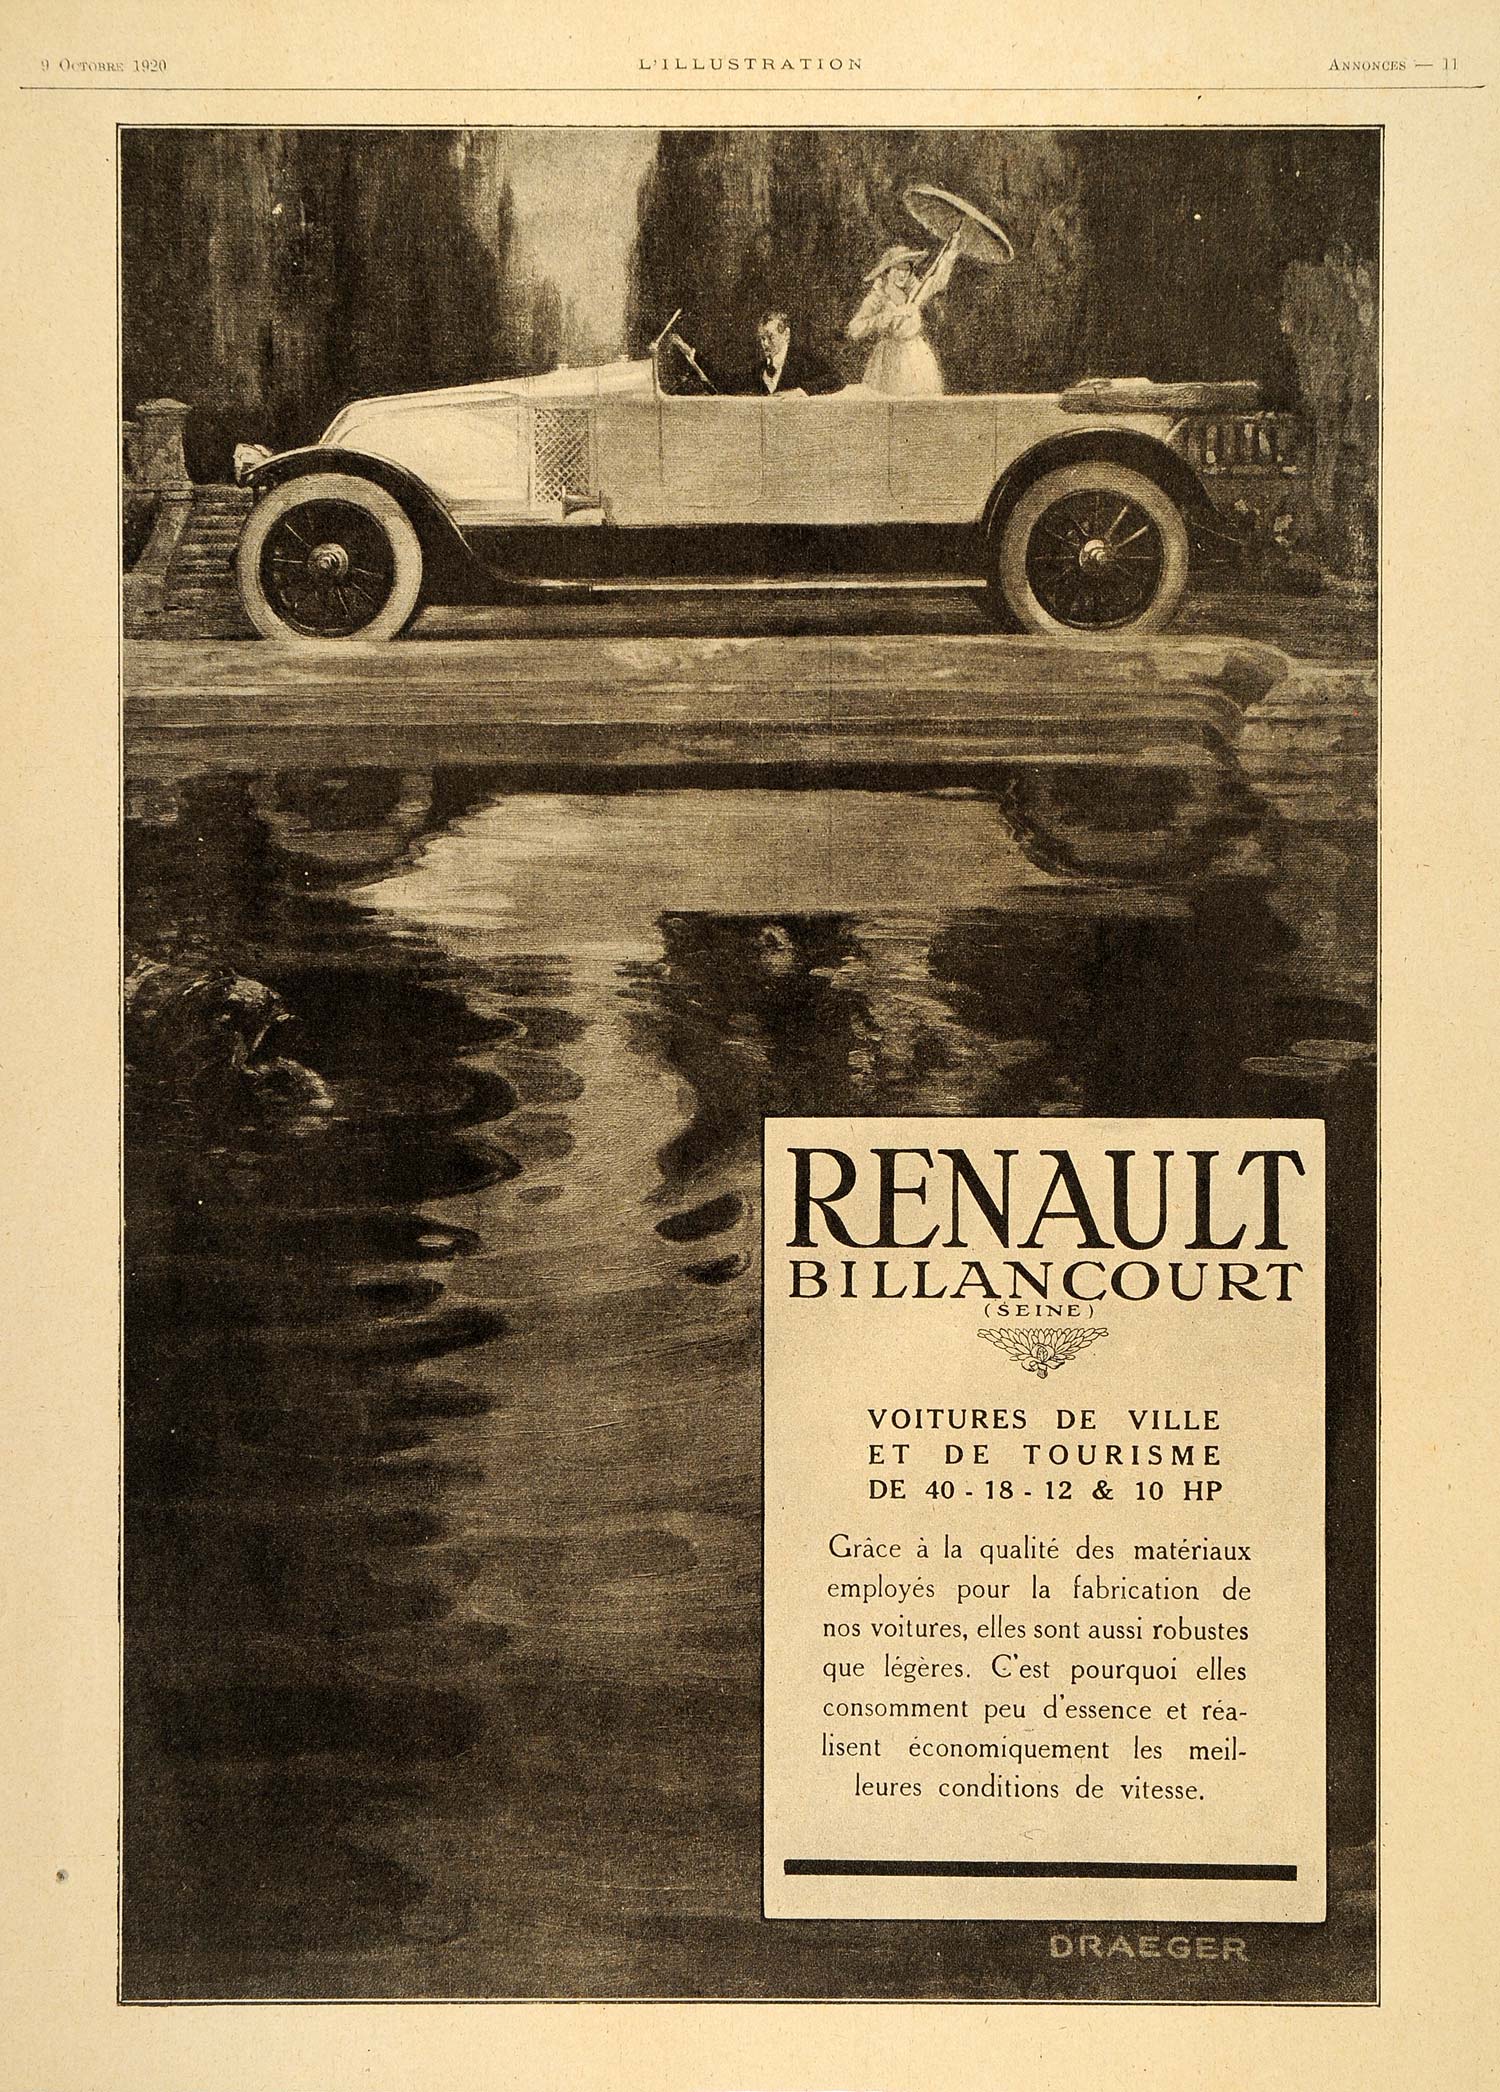 1920 Ad French Renault Billancourt Car Automobile Seine - ORIGINAL ILL3